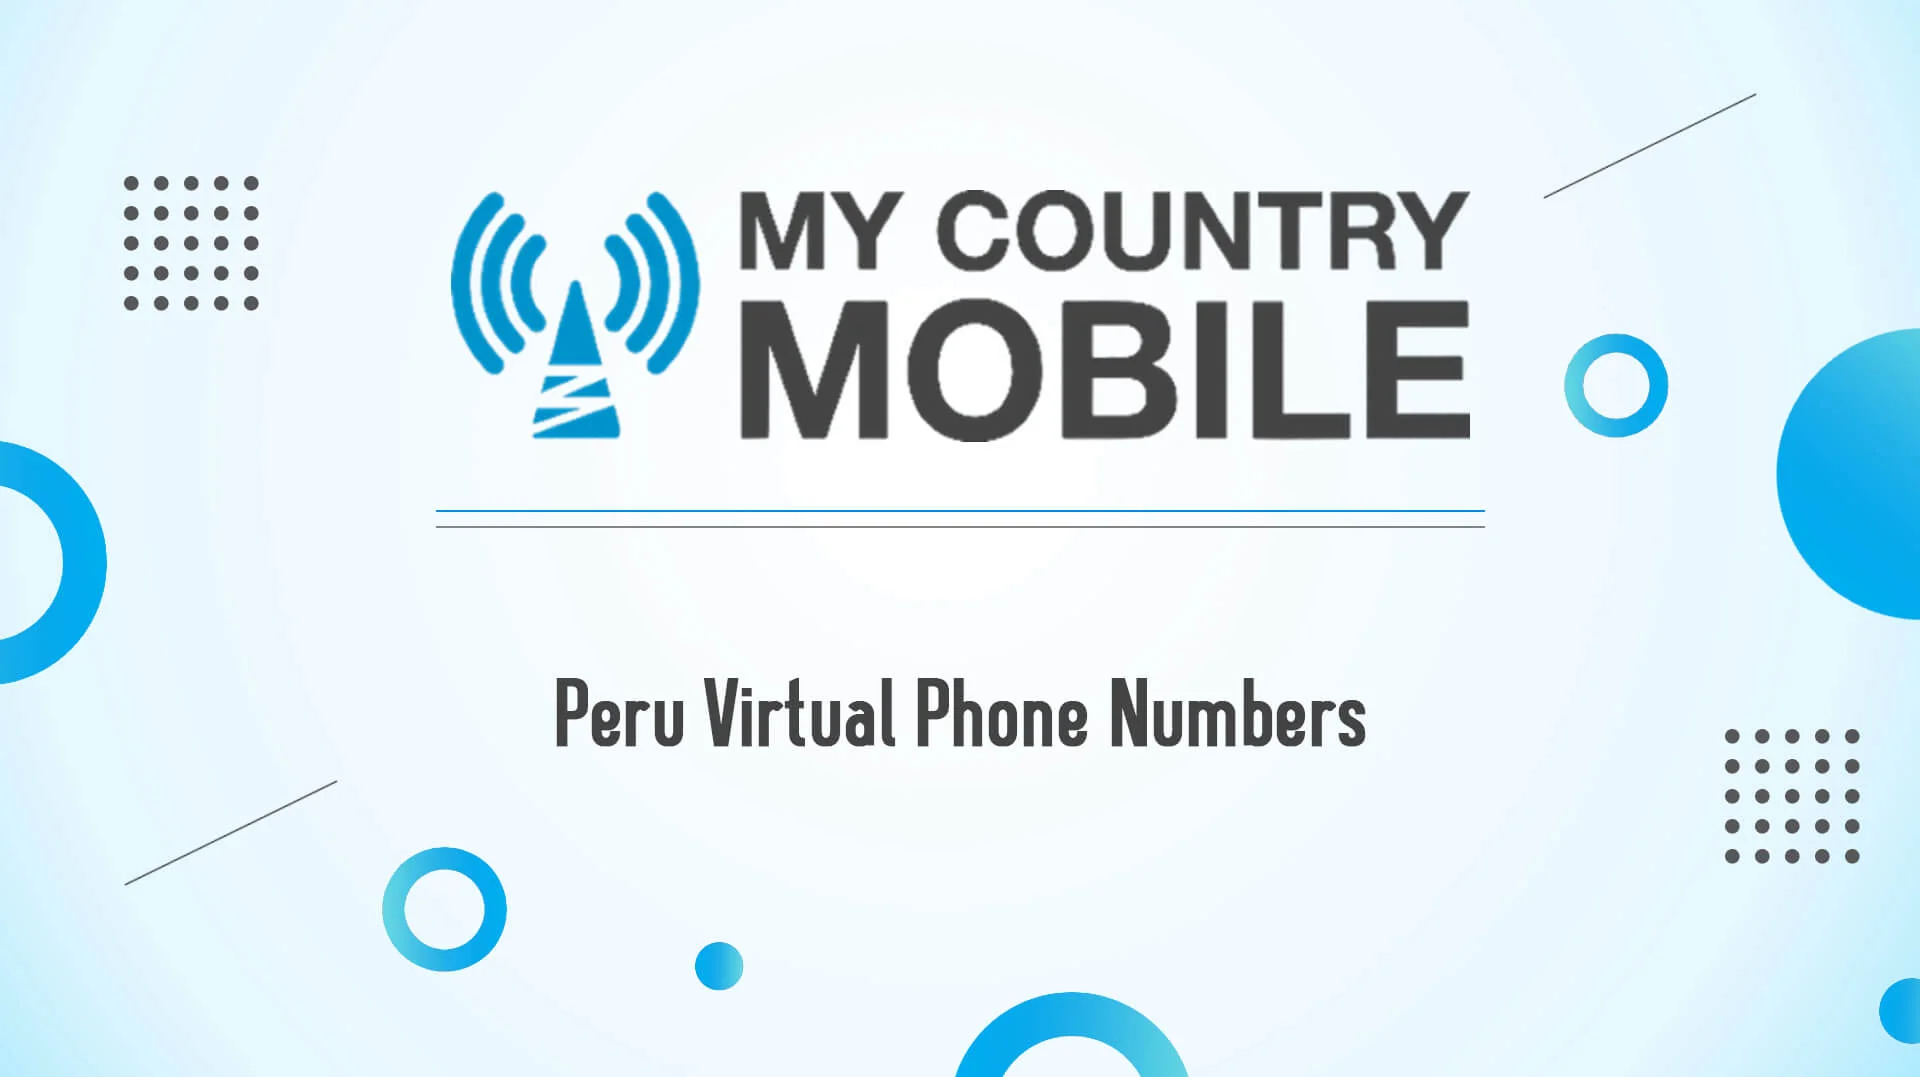 Peru Virtual Phone Numbers